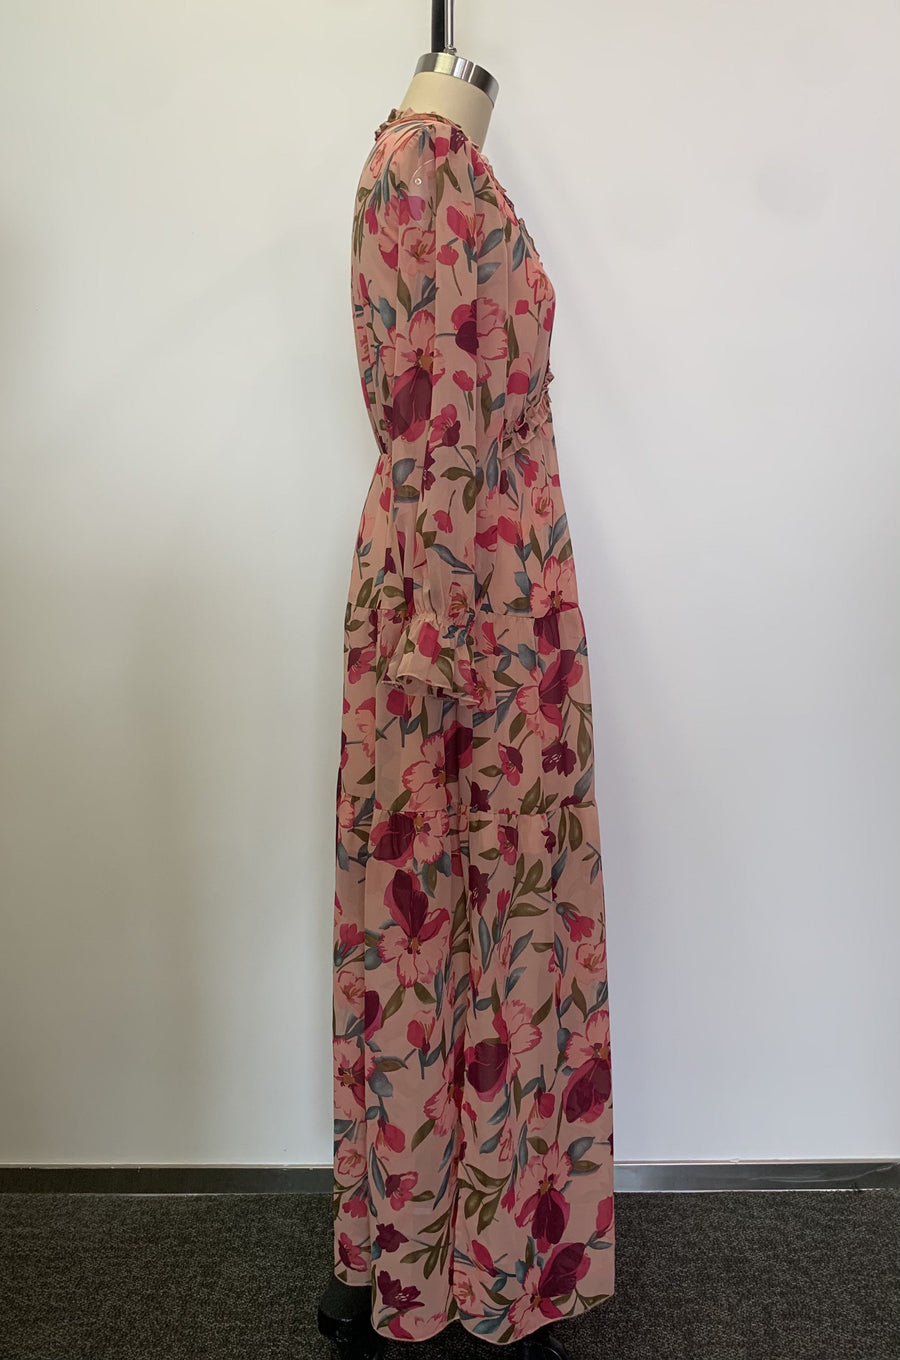 Deep-V Floral Print Ruffled Hem Tiered Dress